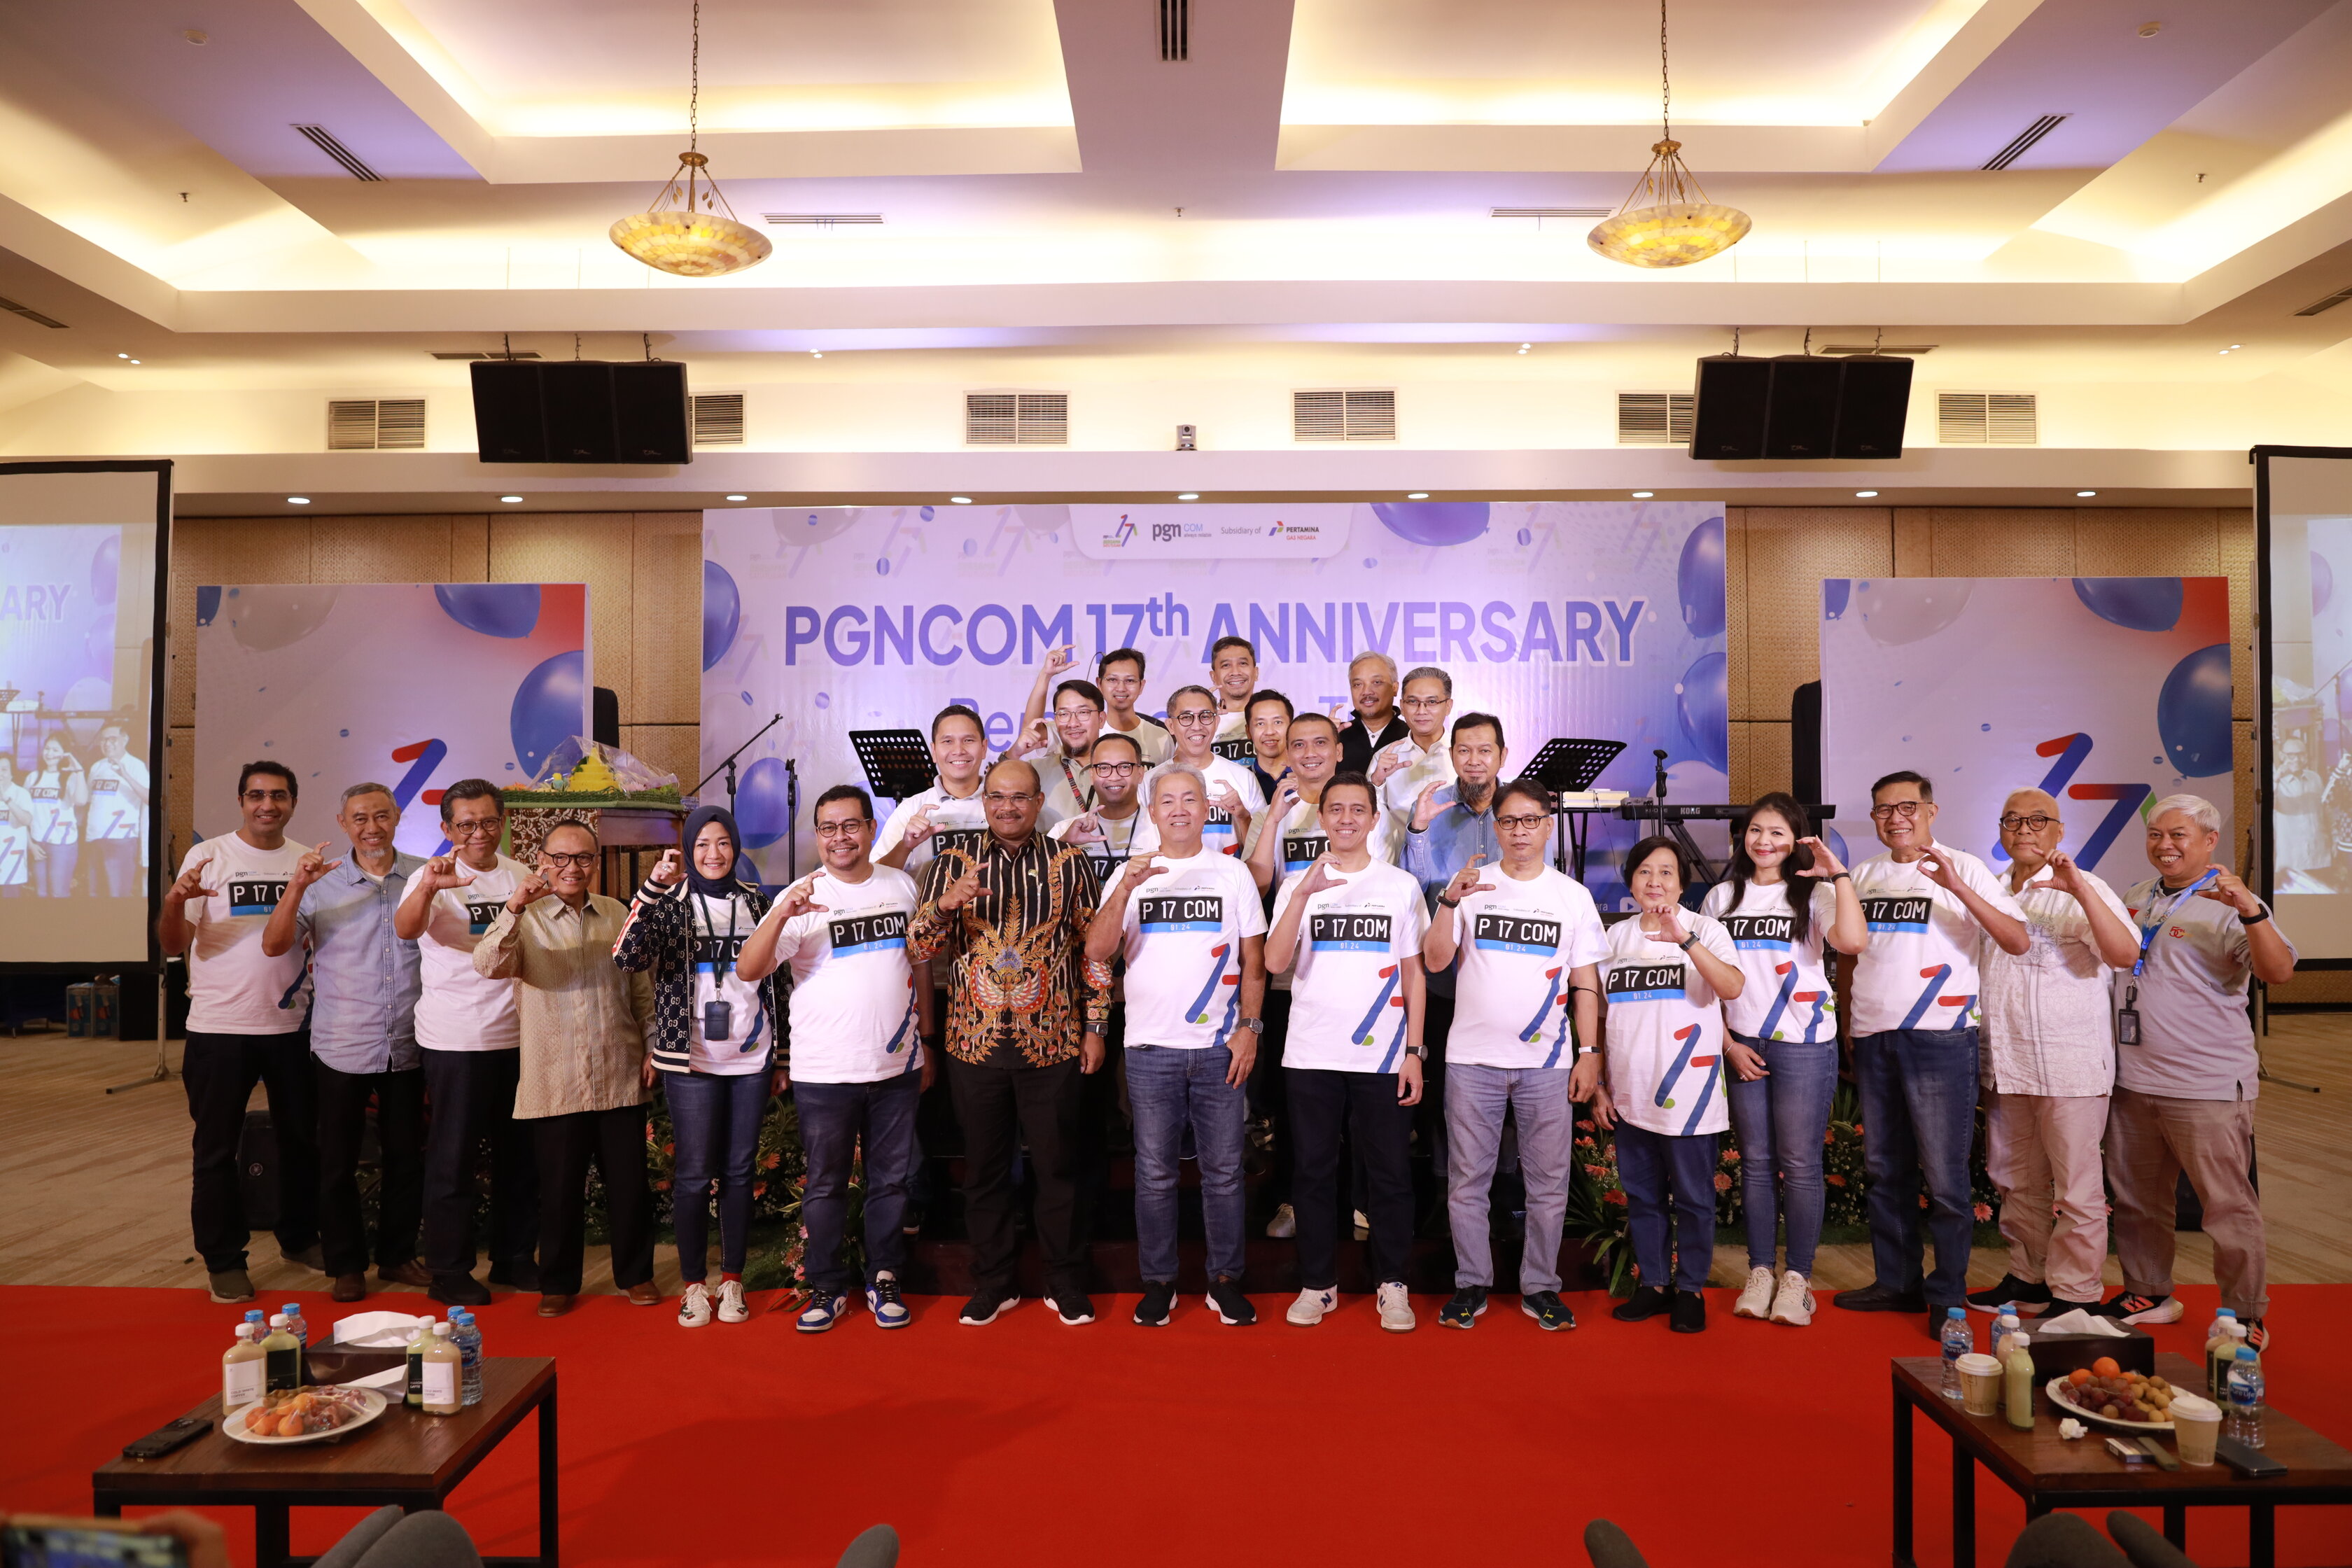 PGNCOM's 17th Anniversary